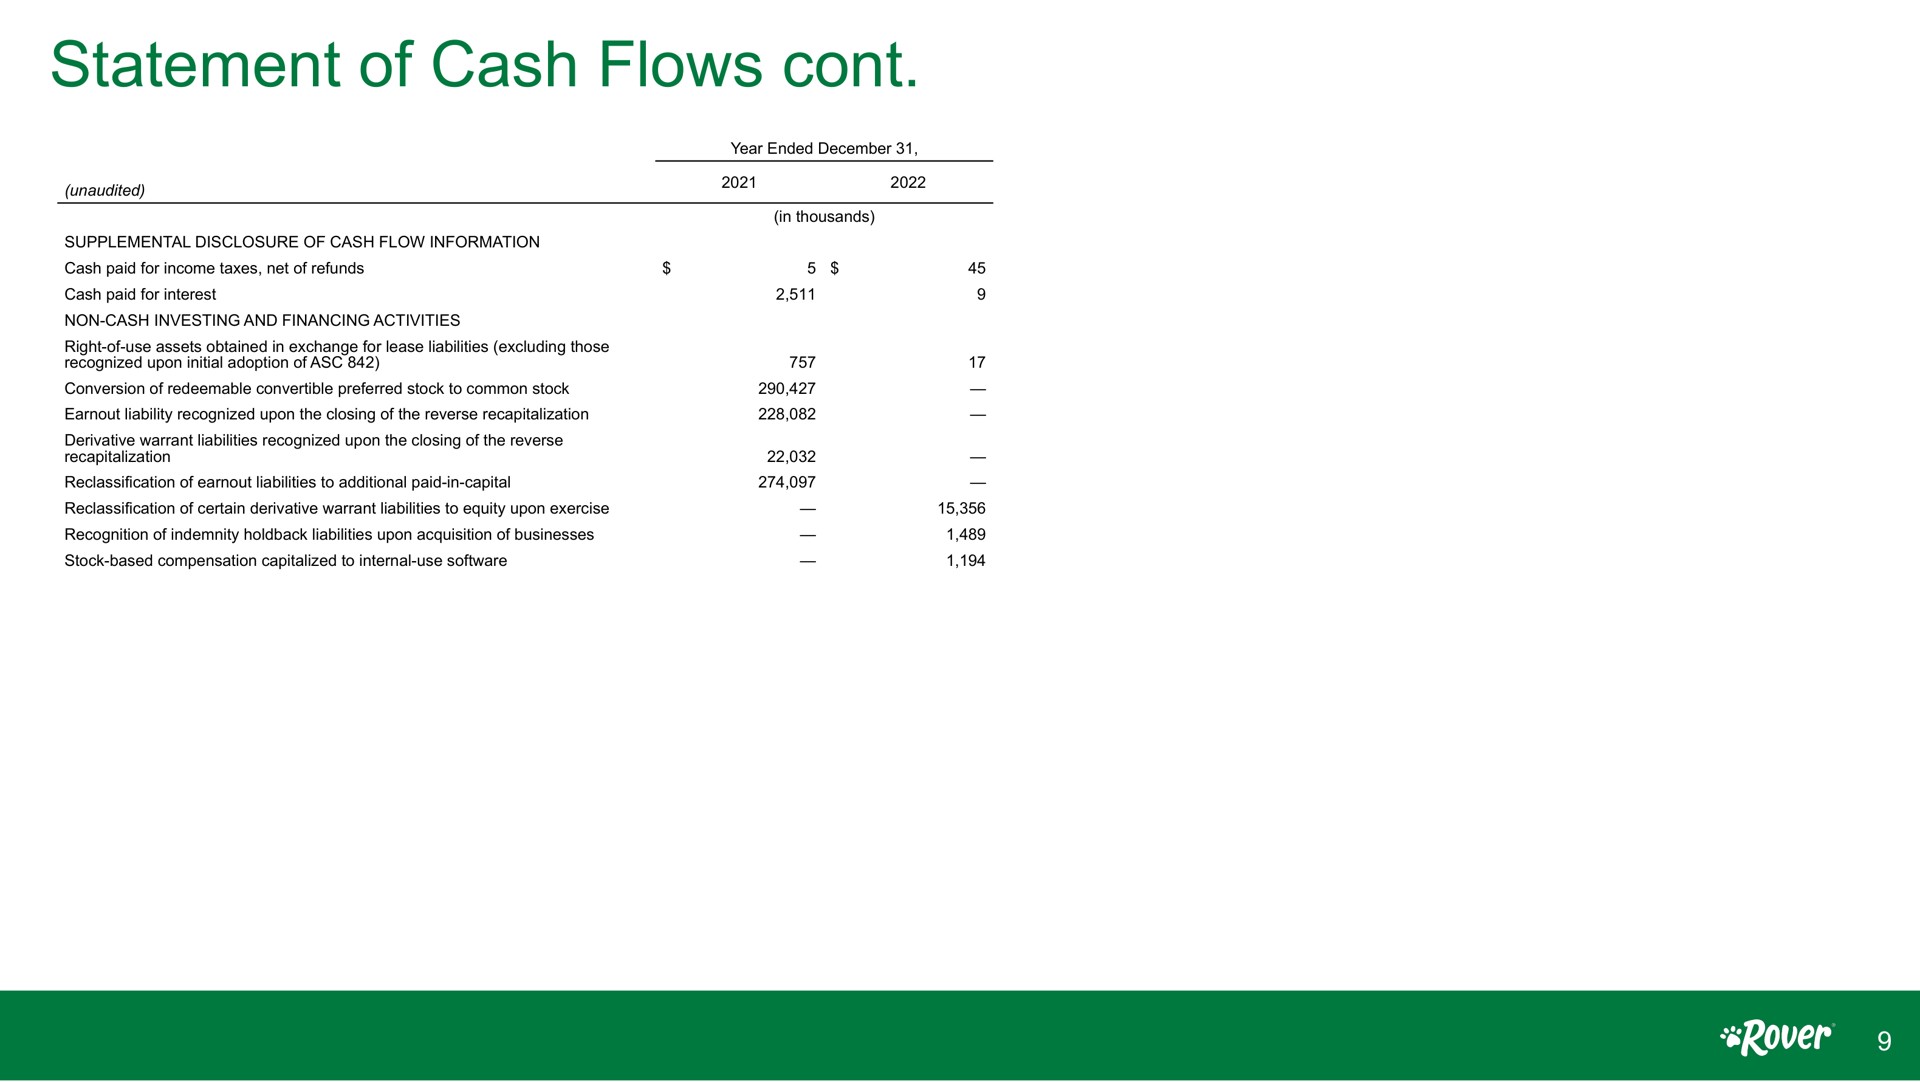 statement of cash flows | Rover